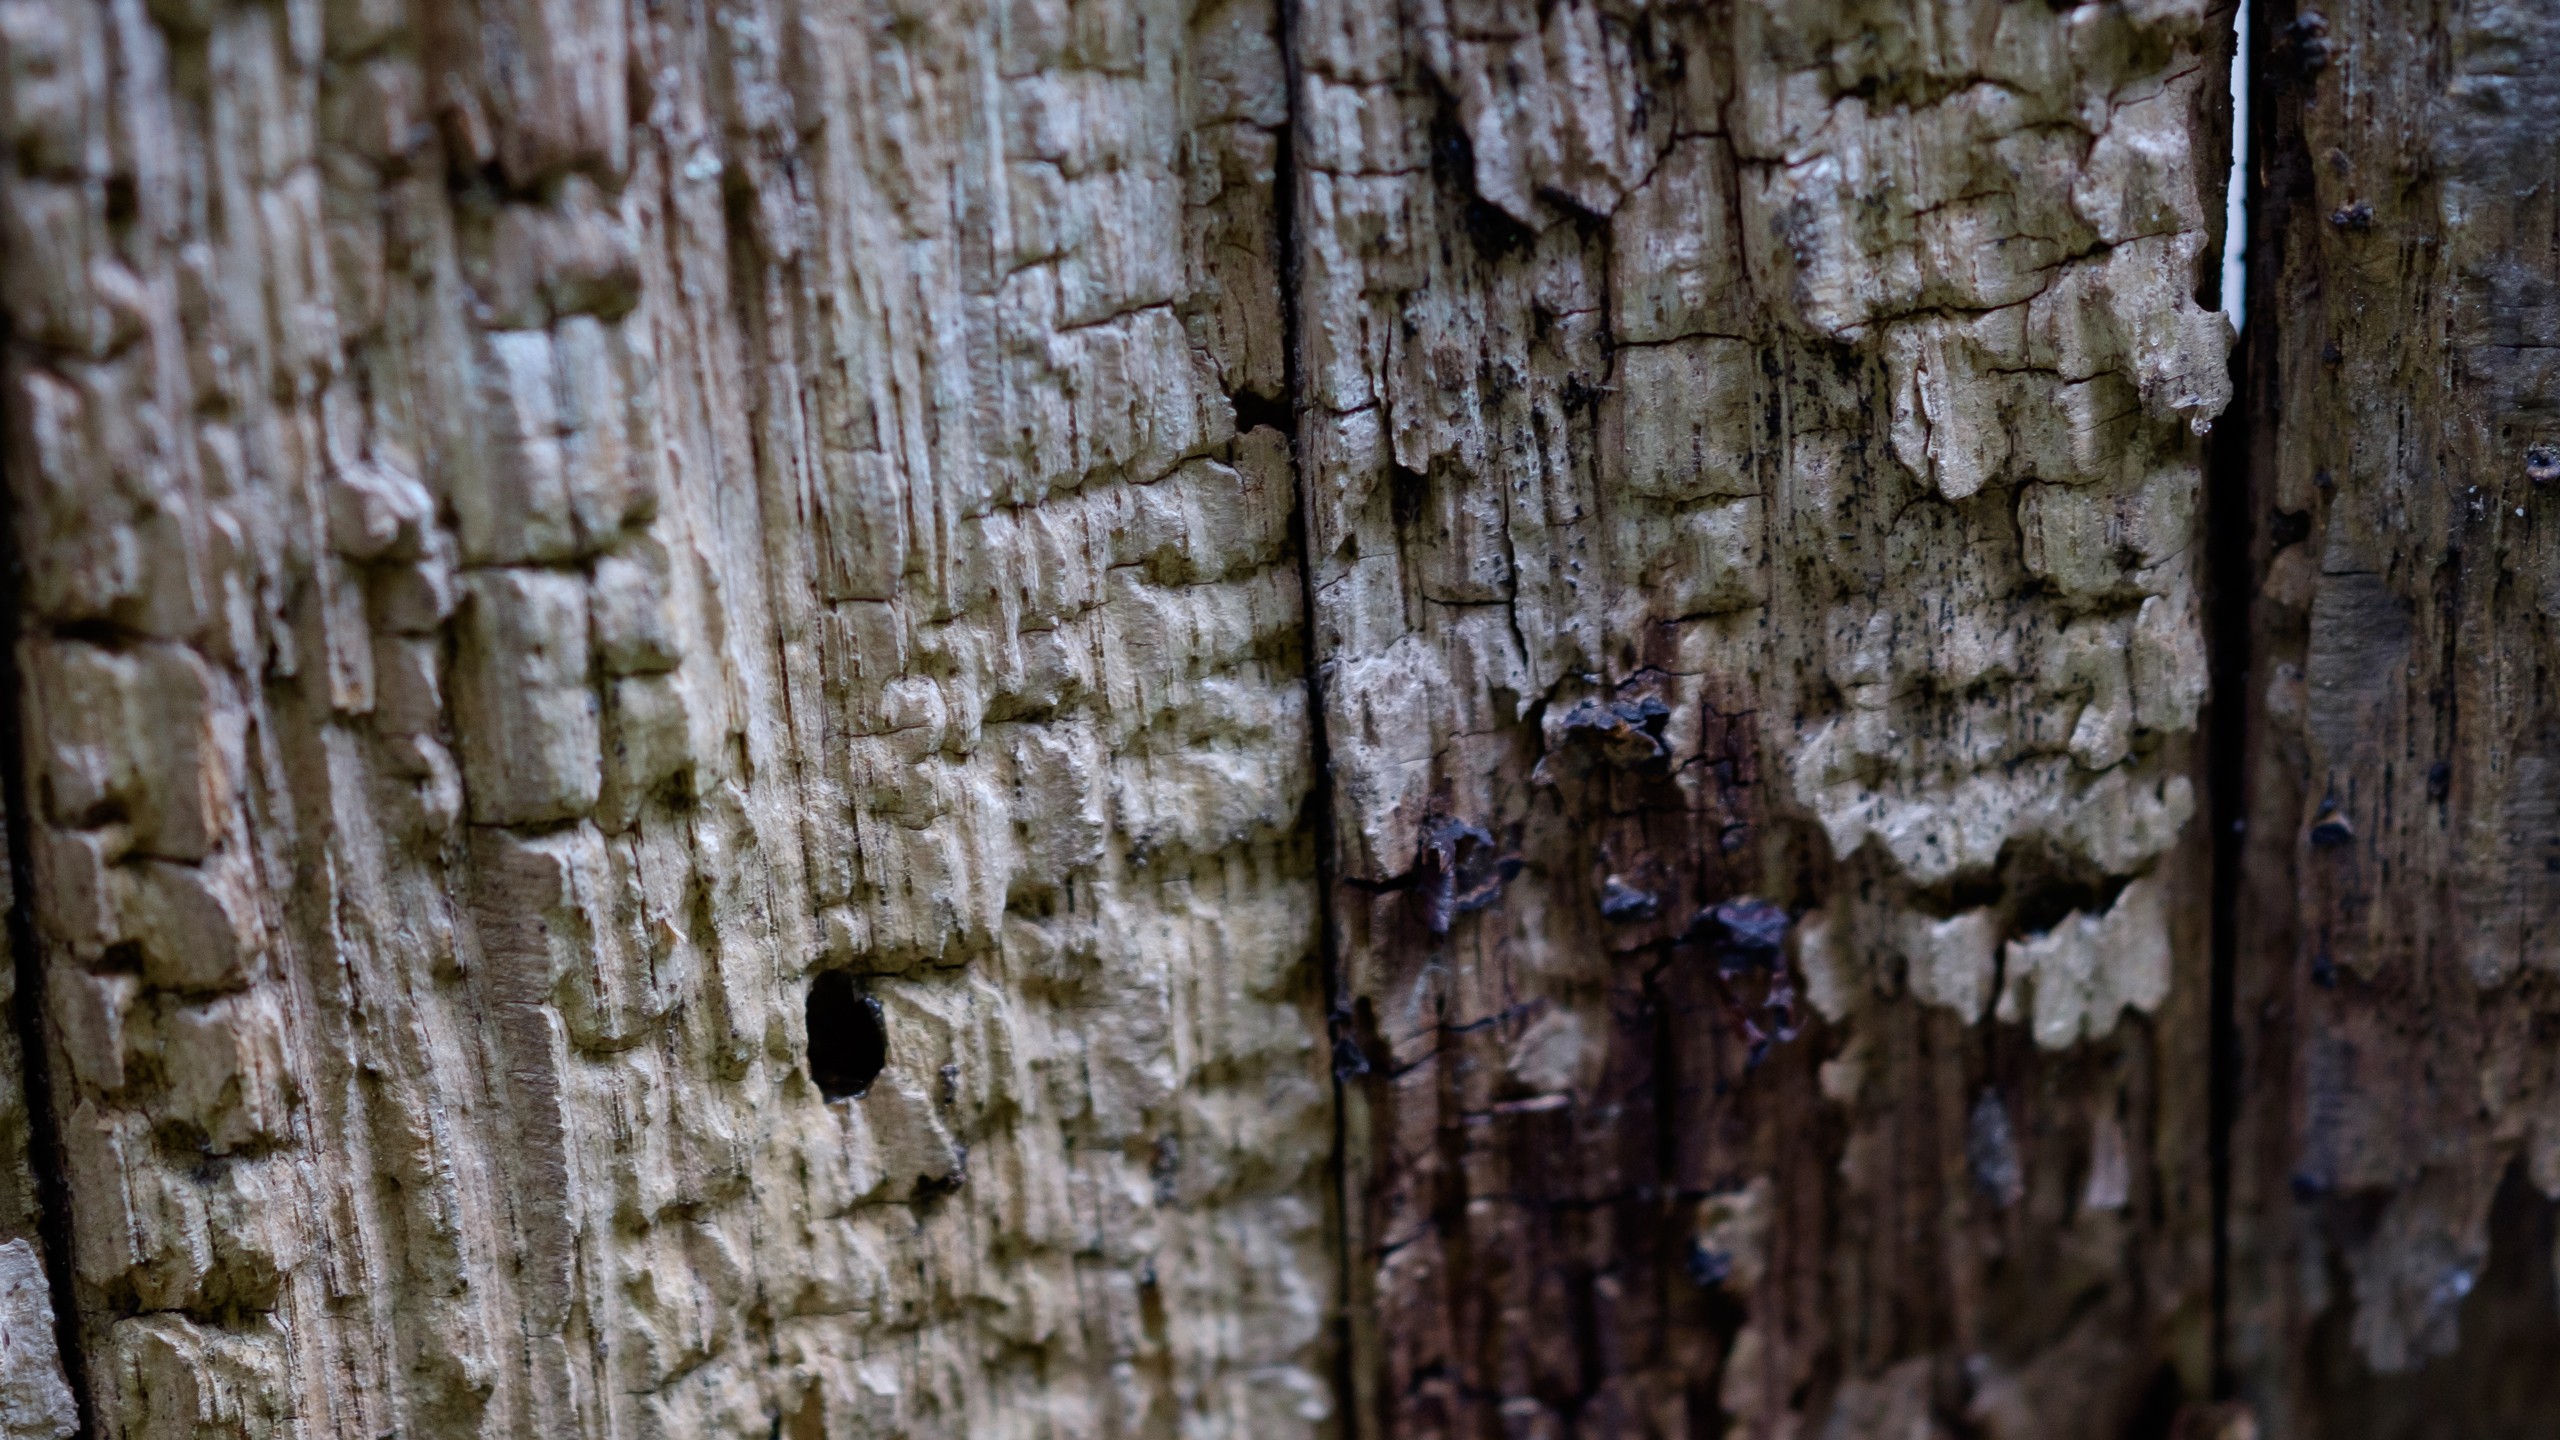 General 2560x1440 tree bark wood closeup texture trees nature